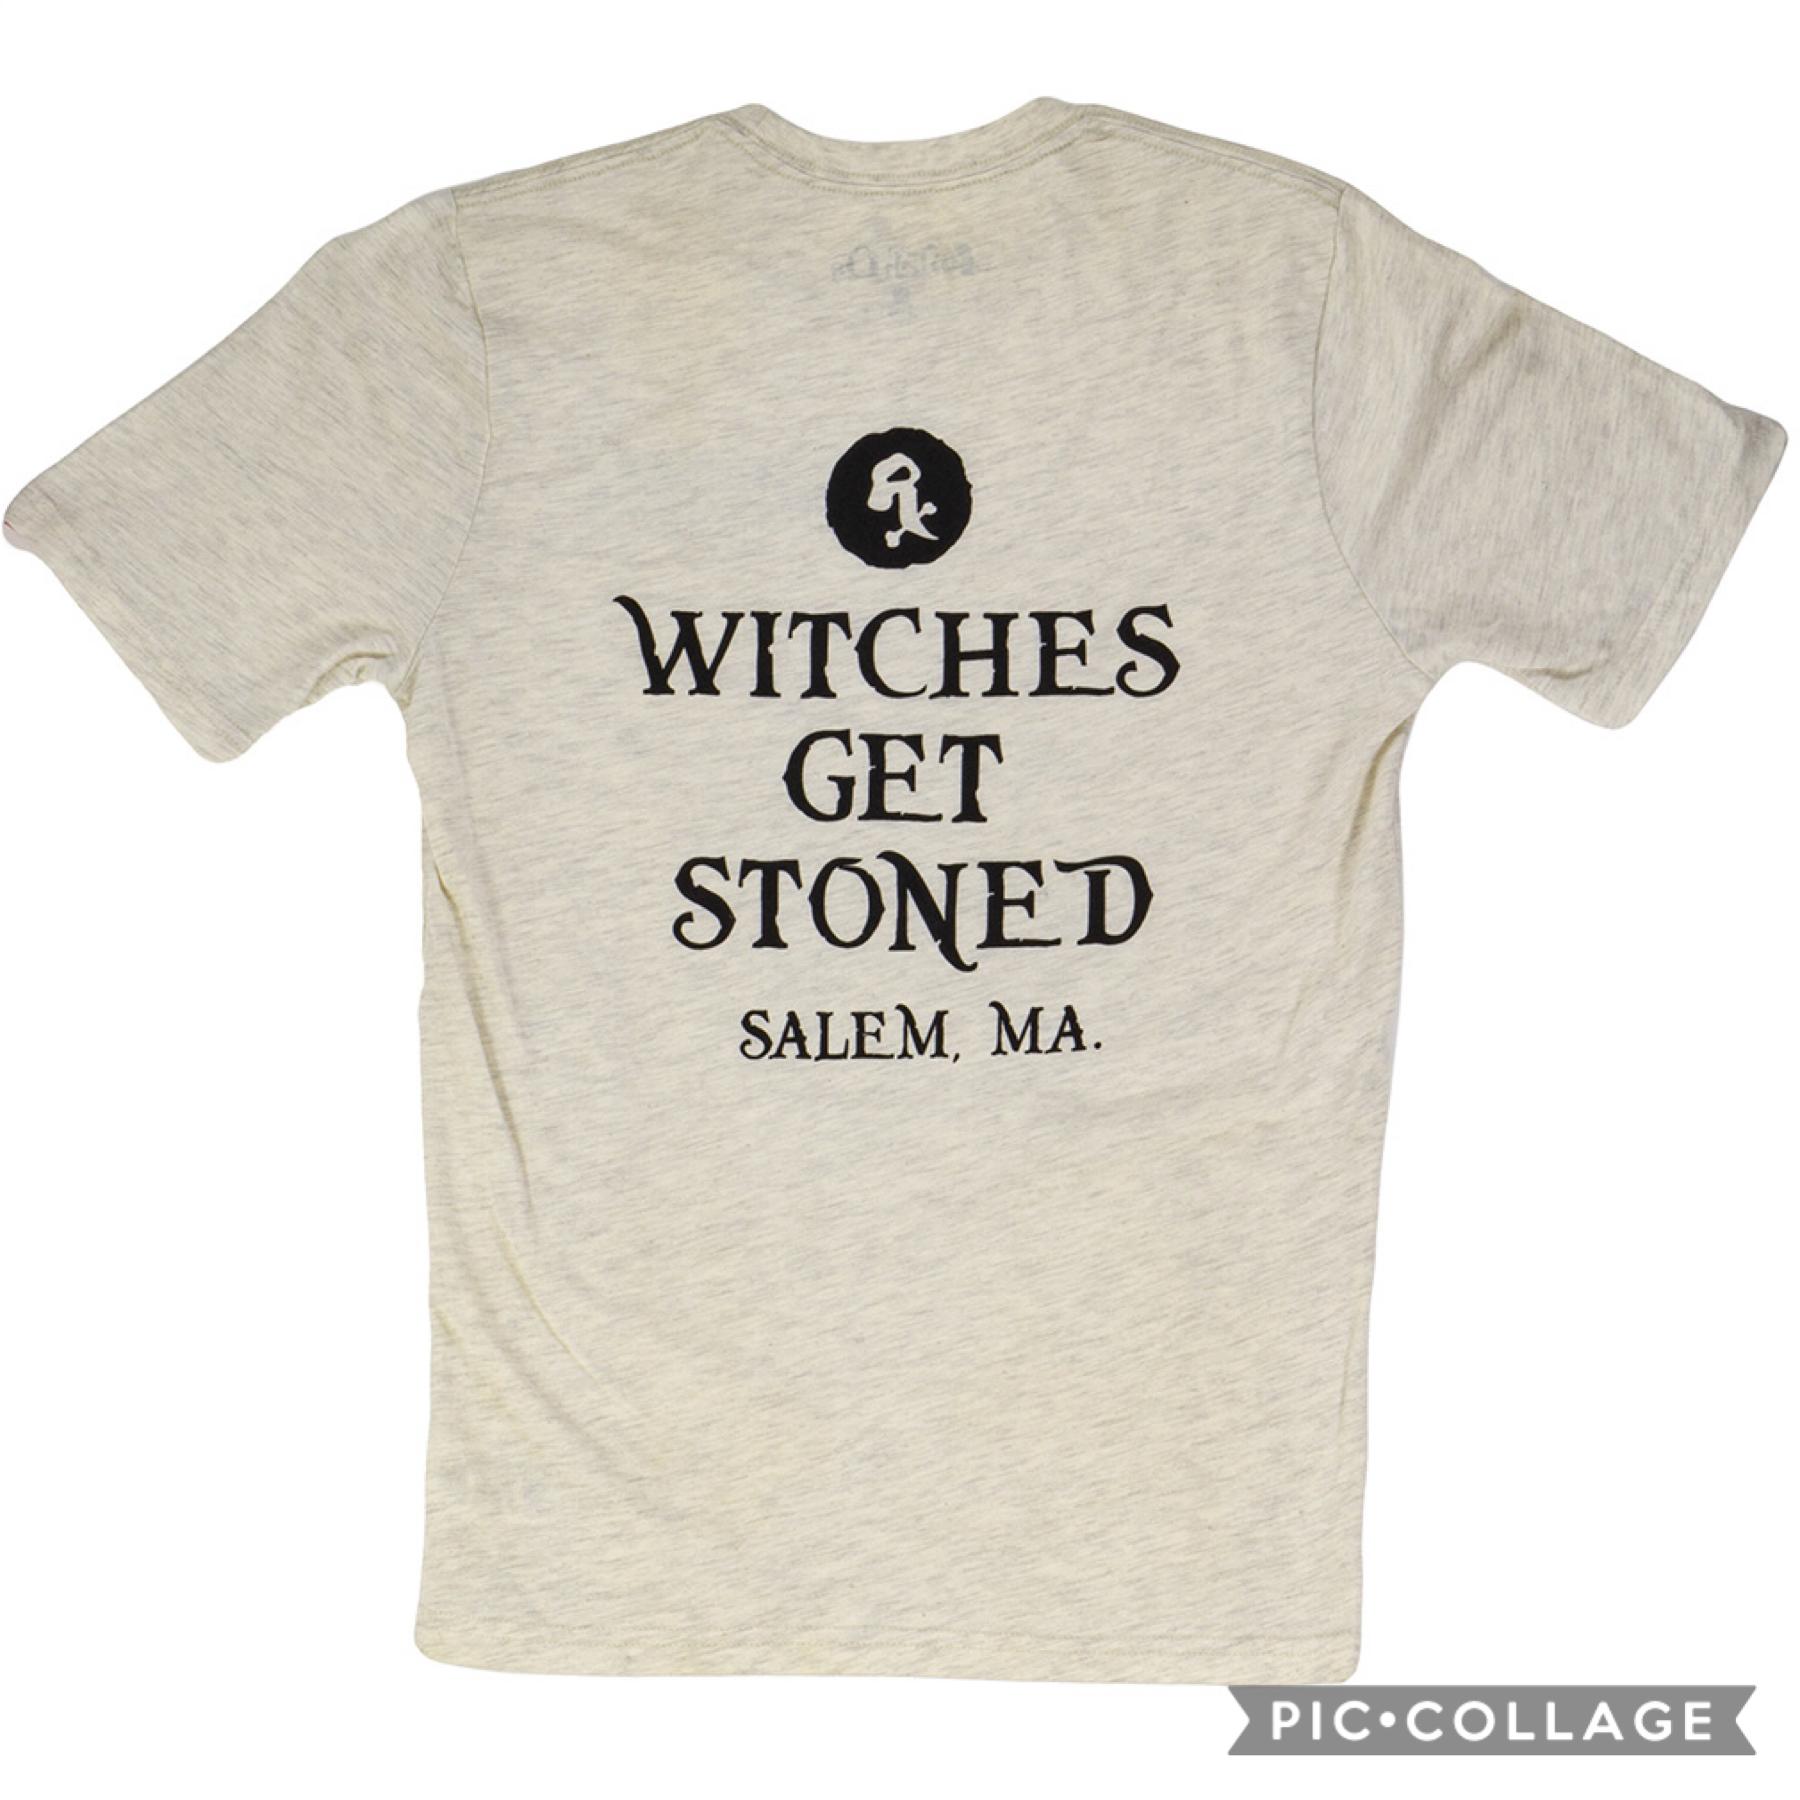 I want this shirt